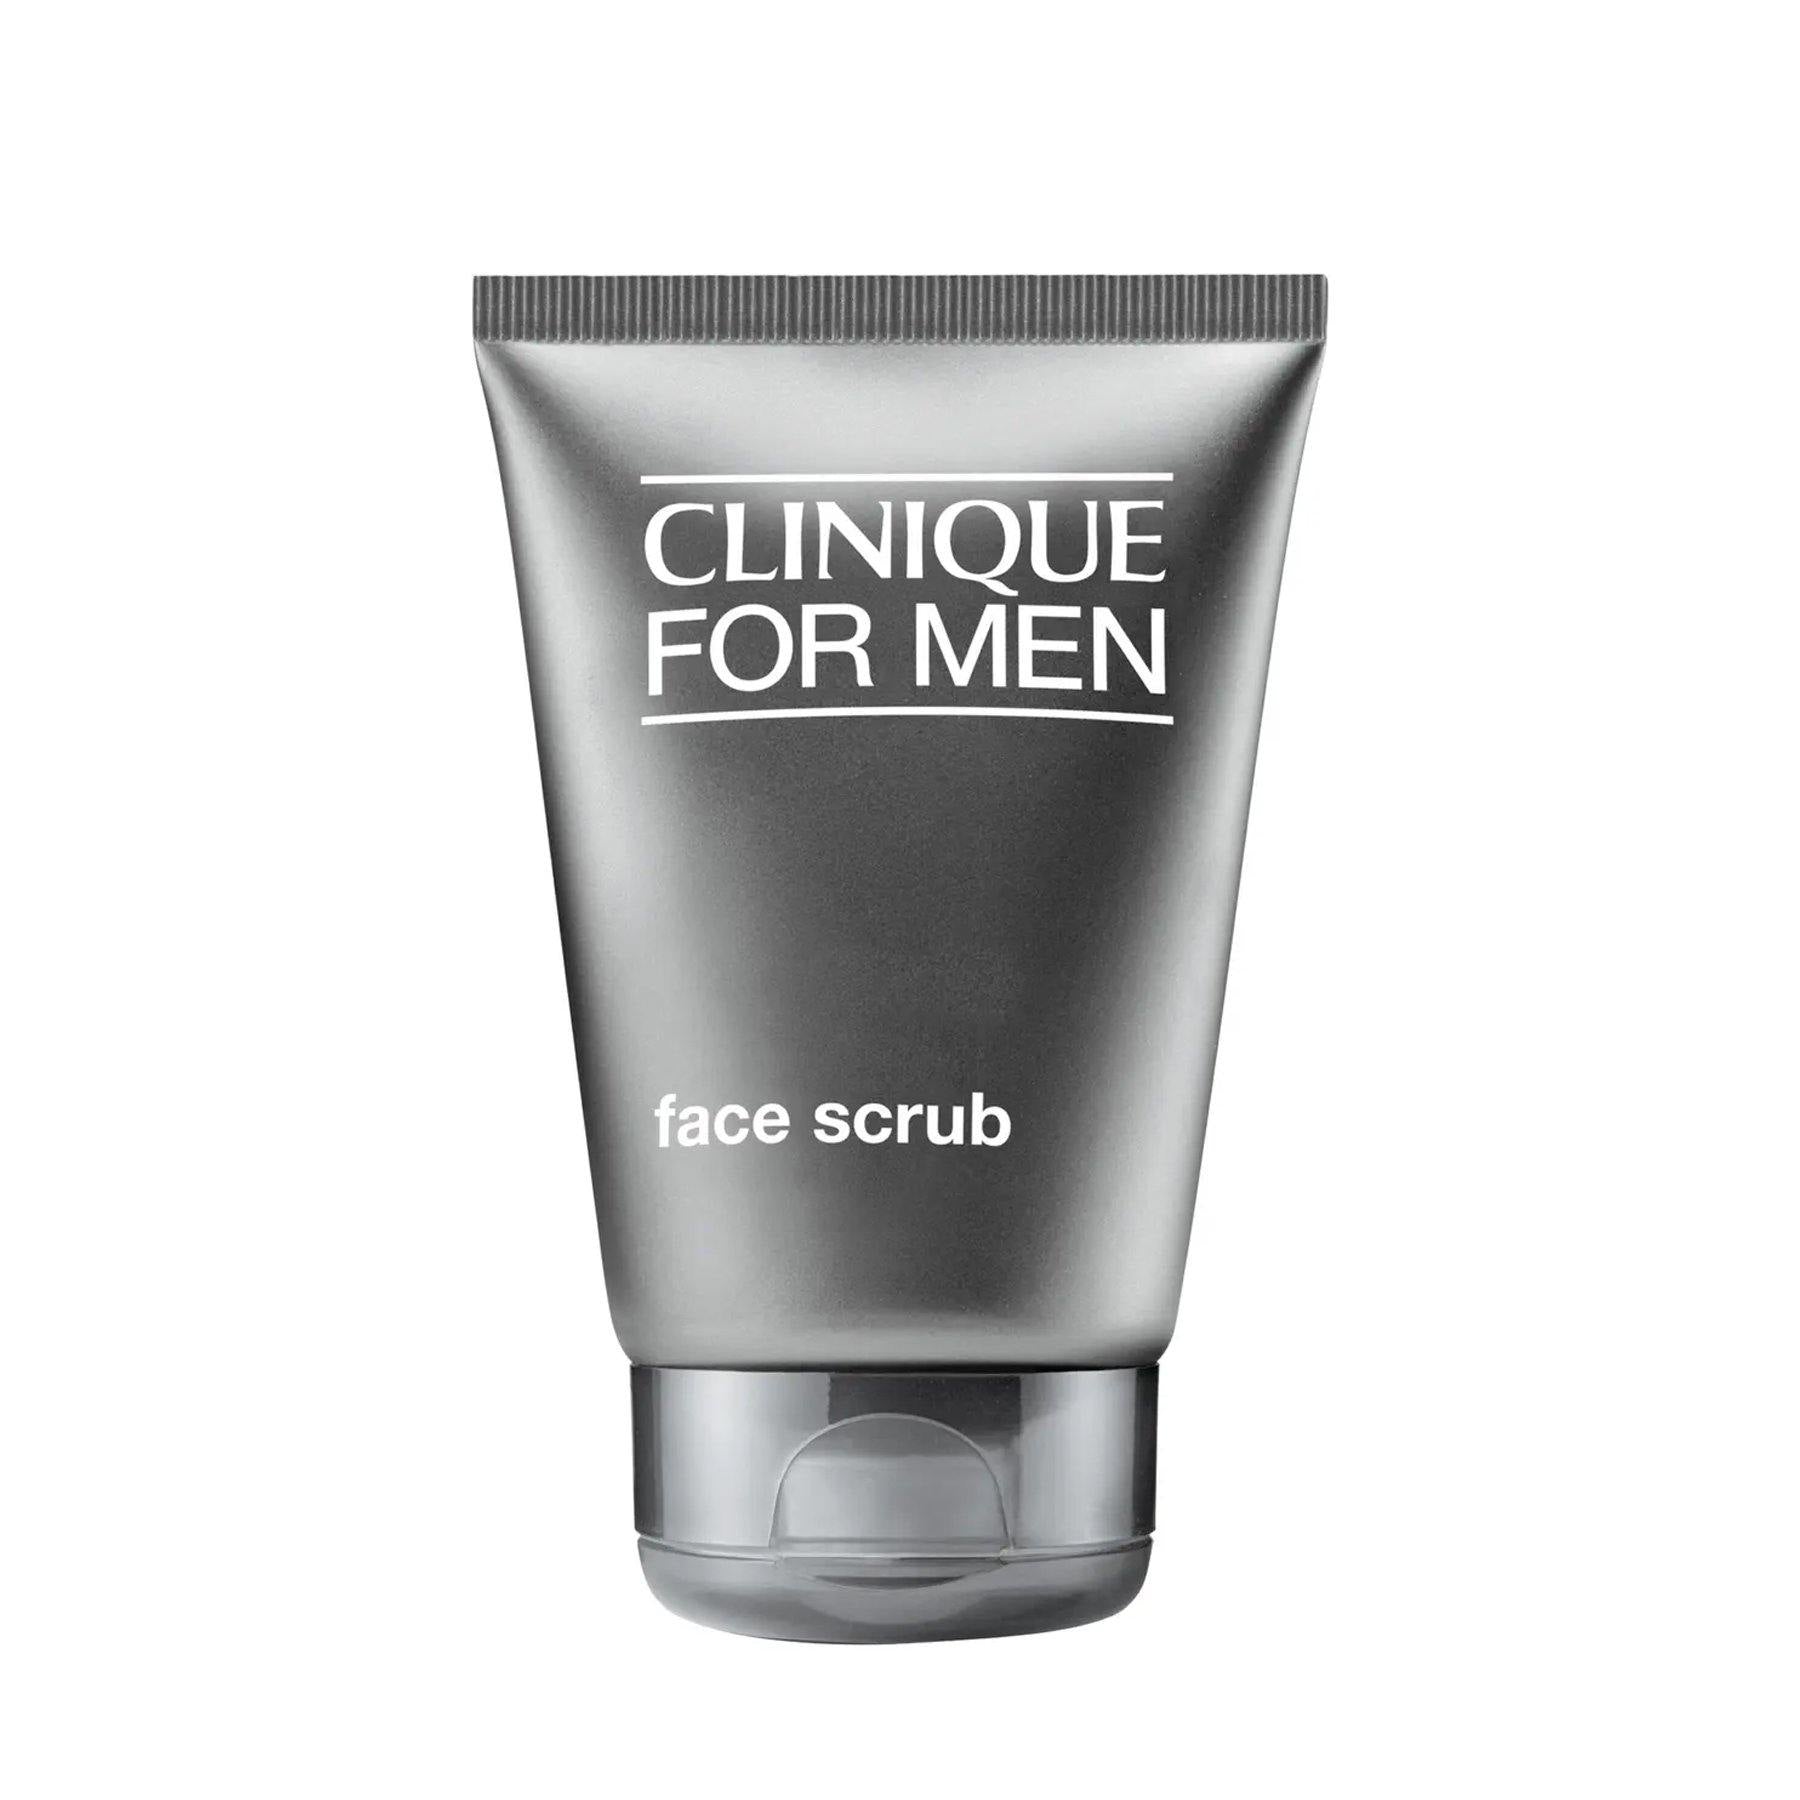 Clinique For Men Face Scrub - Cosmos Boutique New Jersey